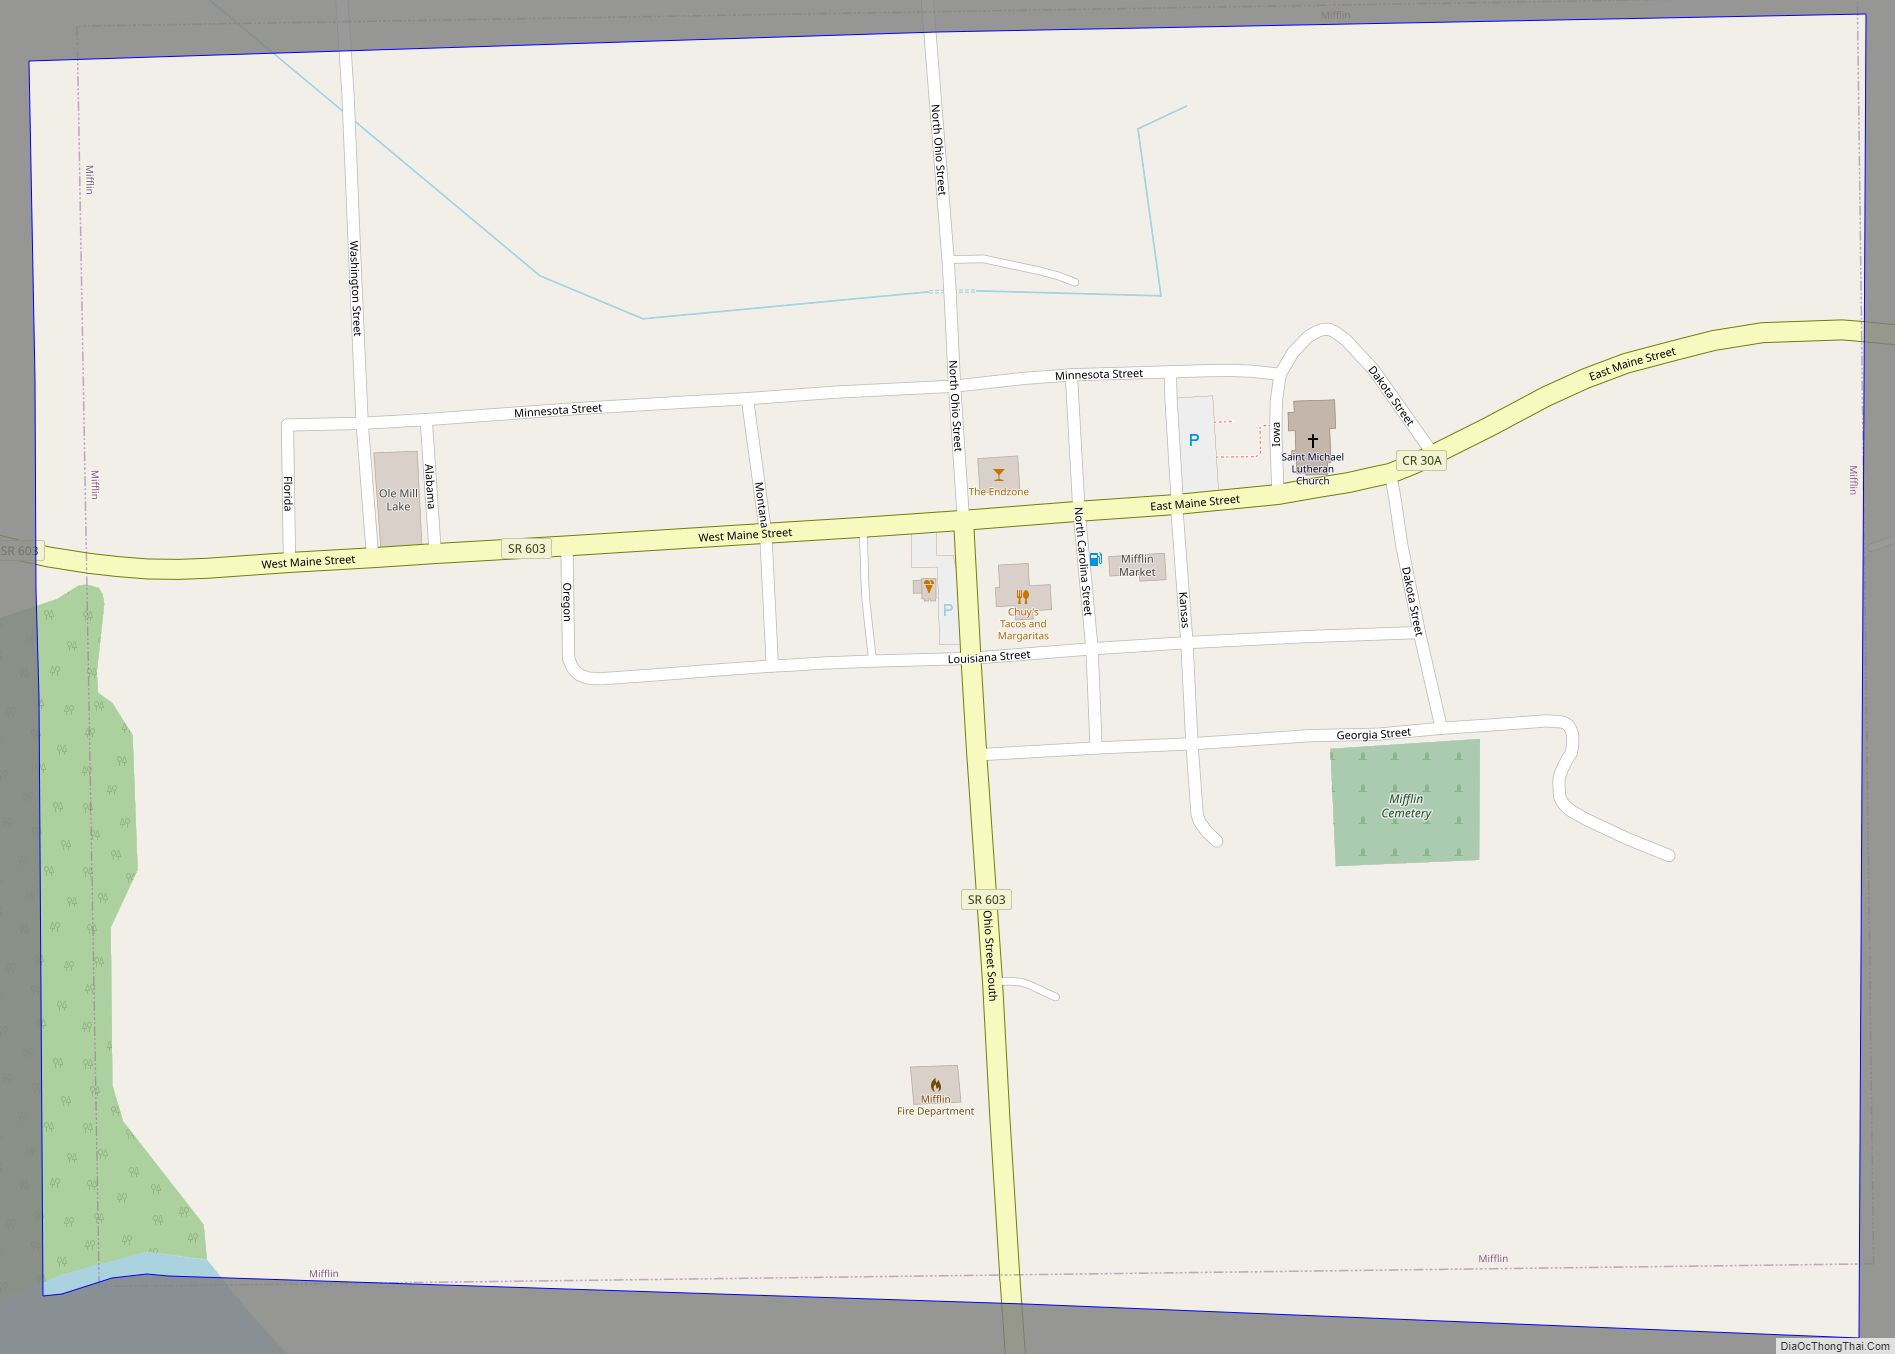 Map of Mifflin village